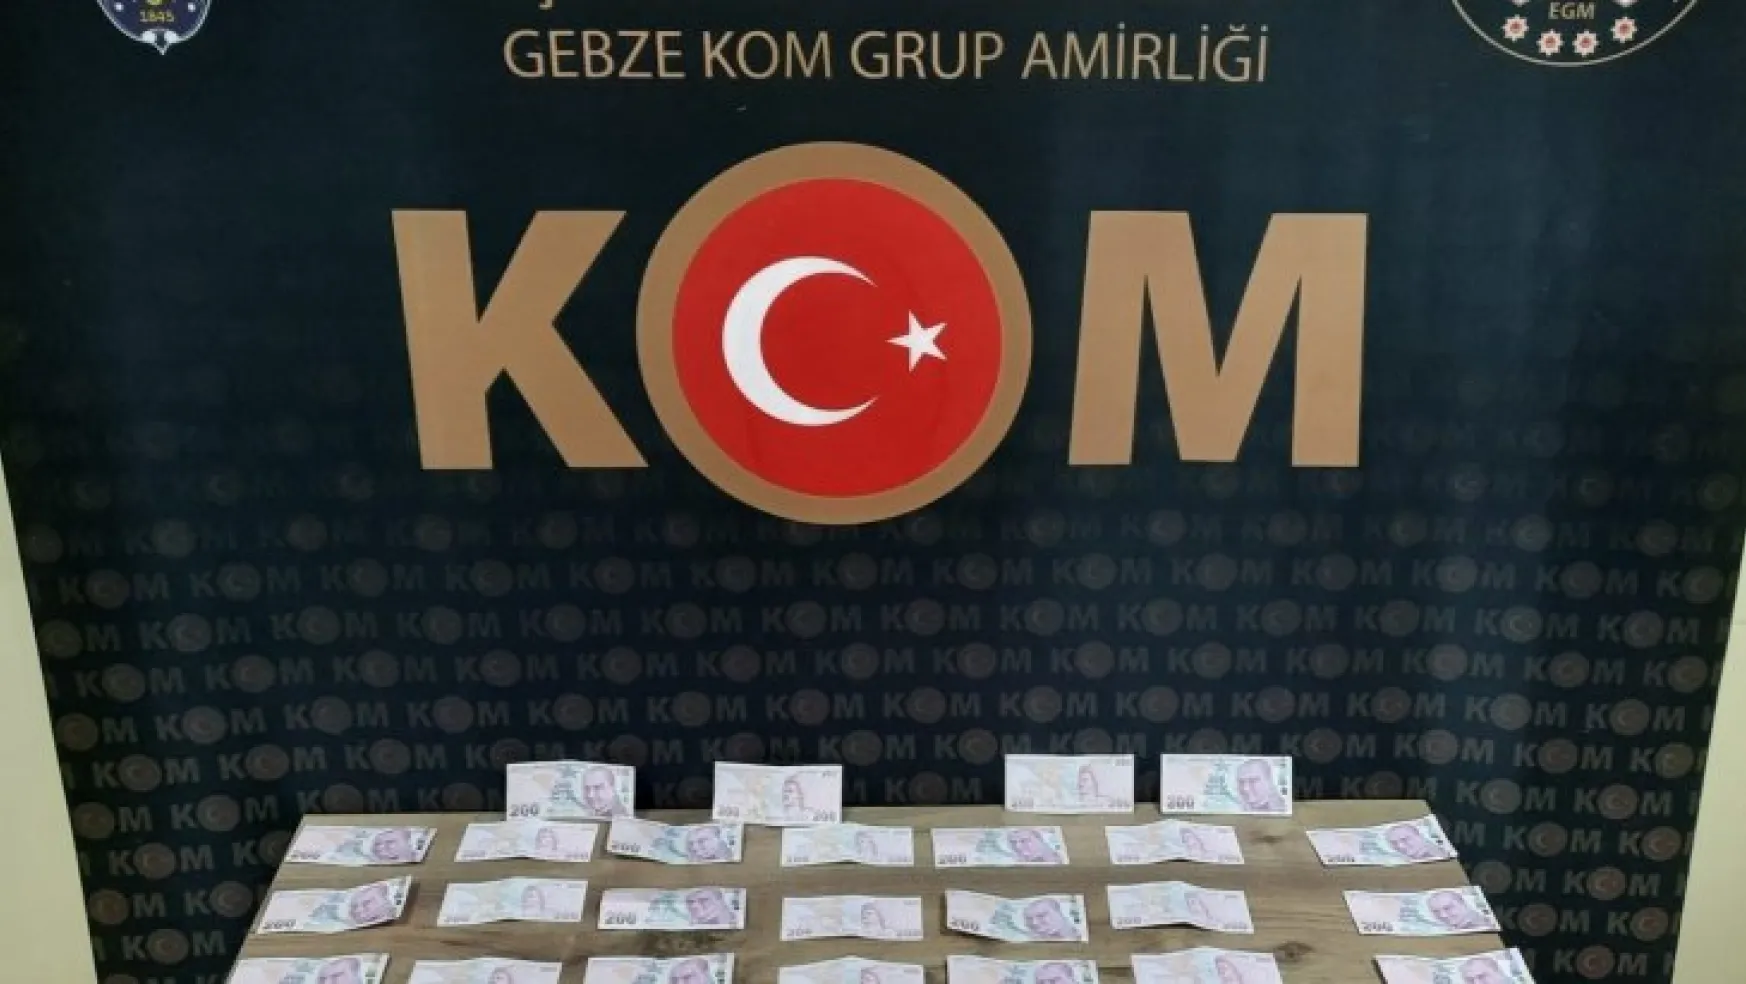 Sahte para ile yakalanan 4 kişi tutuklandı